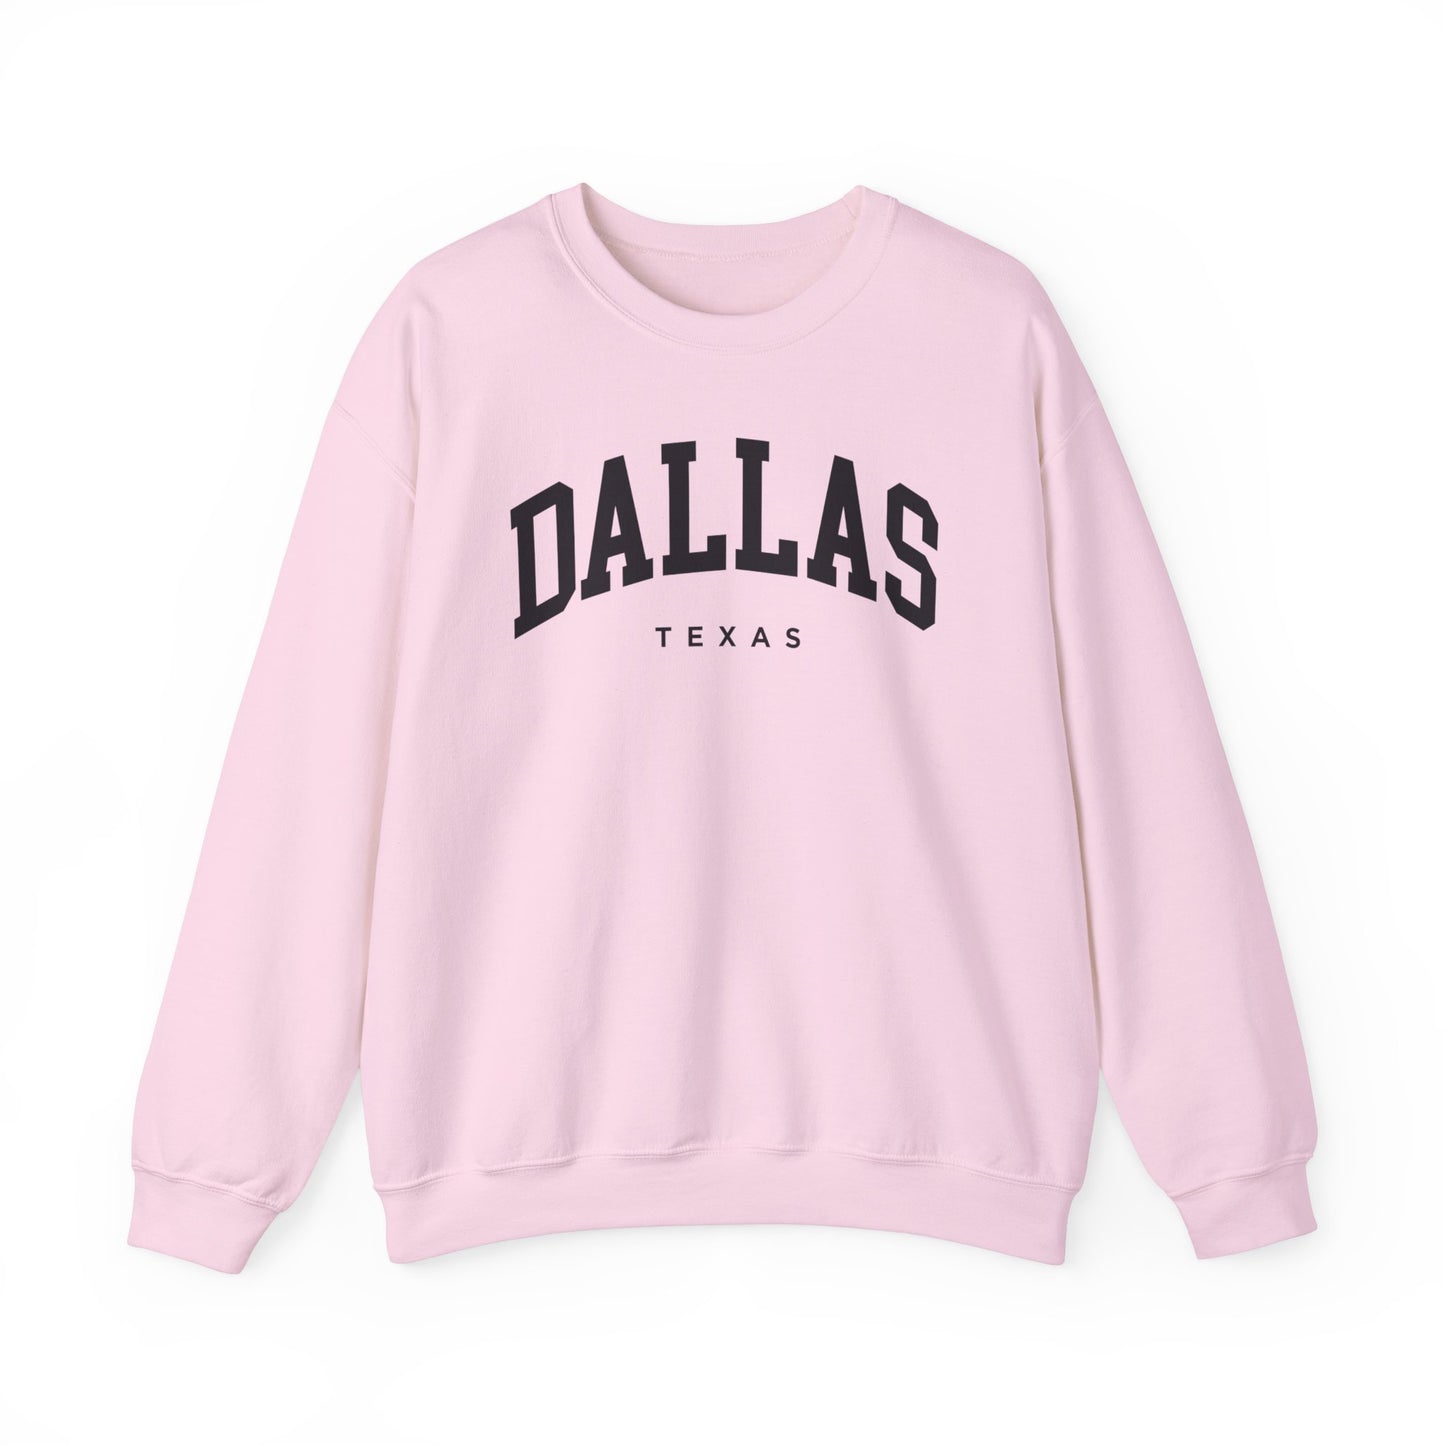 Dallas Texas Sweatshirt